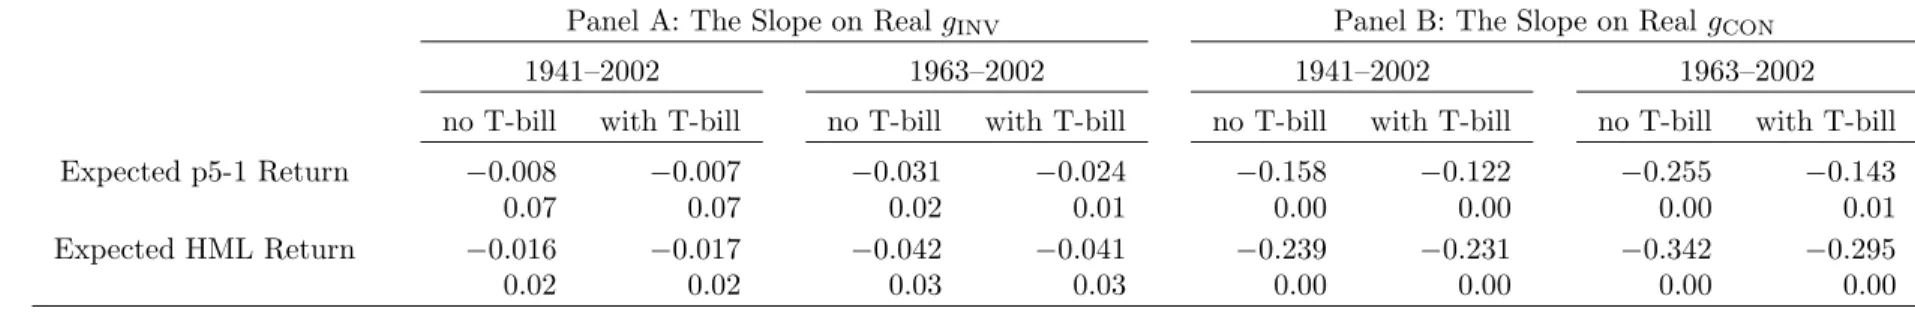 Table 4 : VAR Analysis (1941 to 2002)